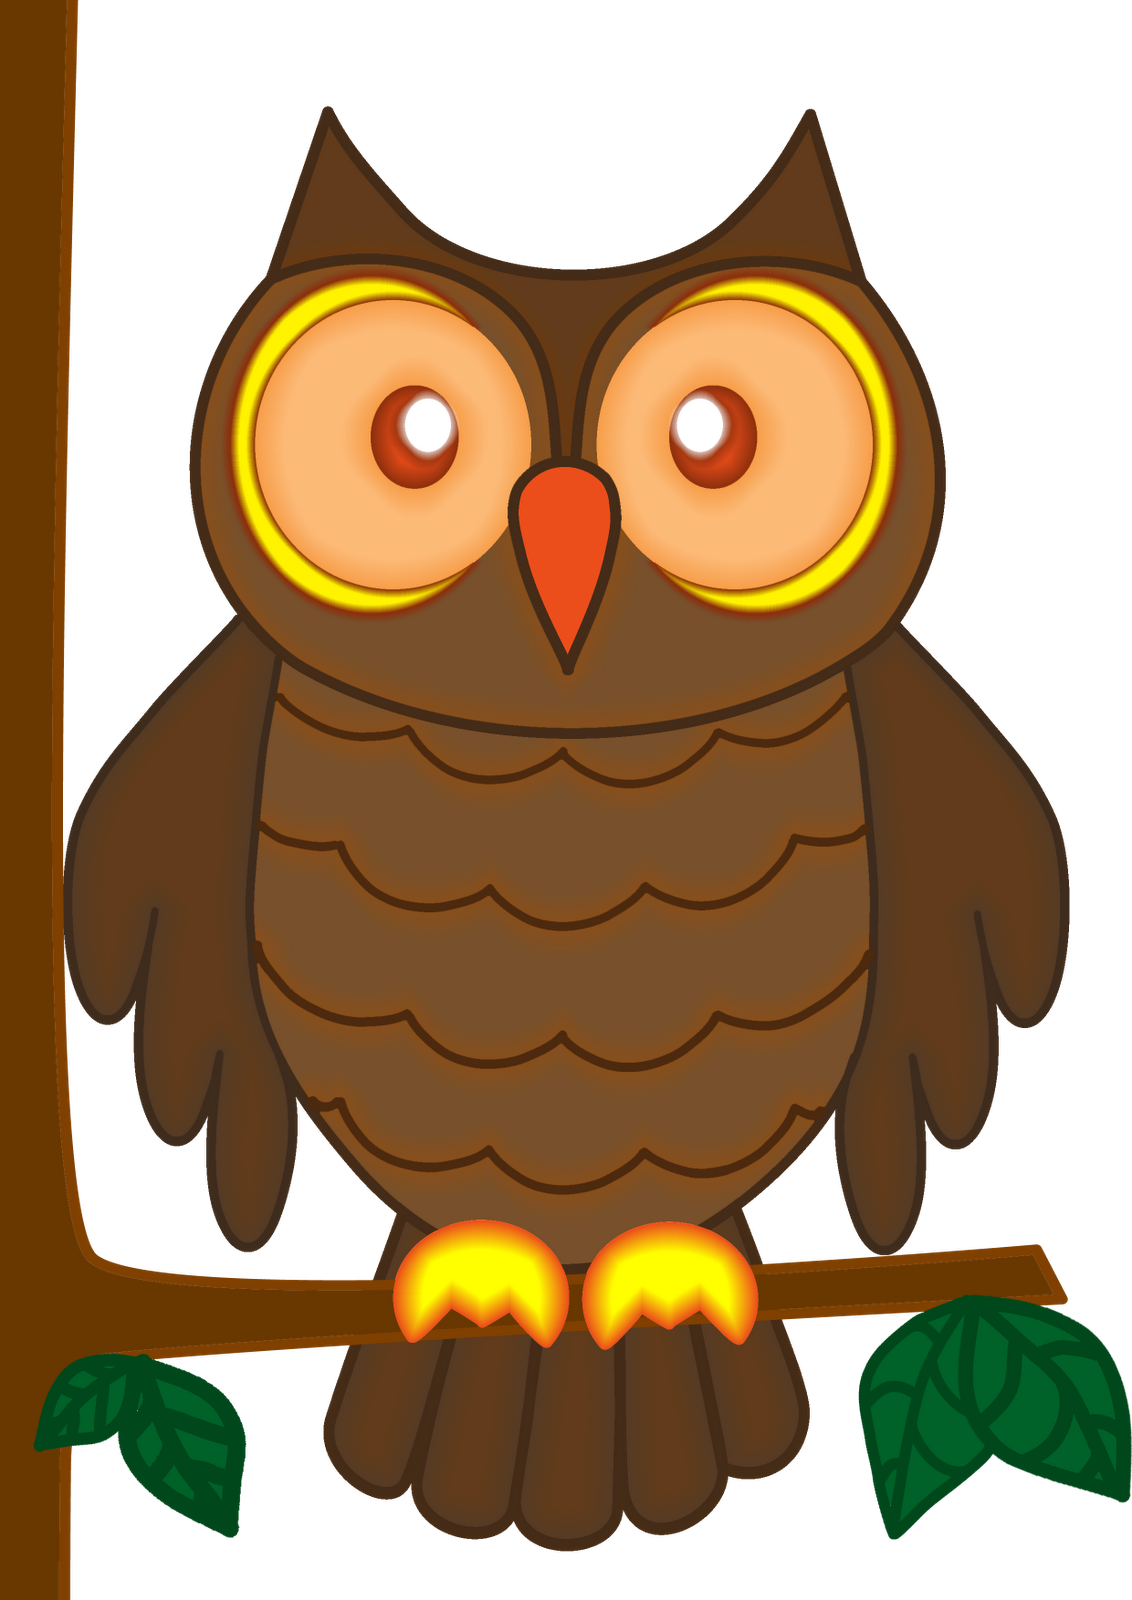 Owl craft projects animals. Owls clipart scrapbook